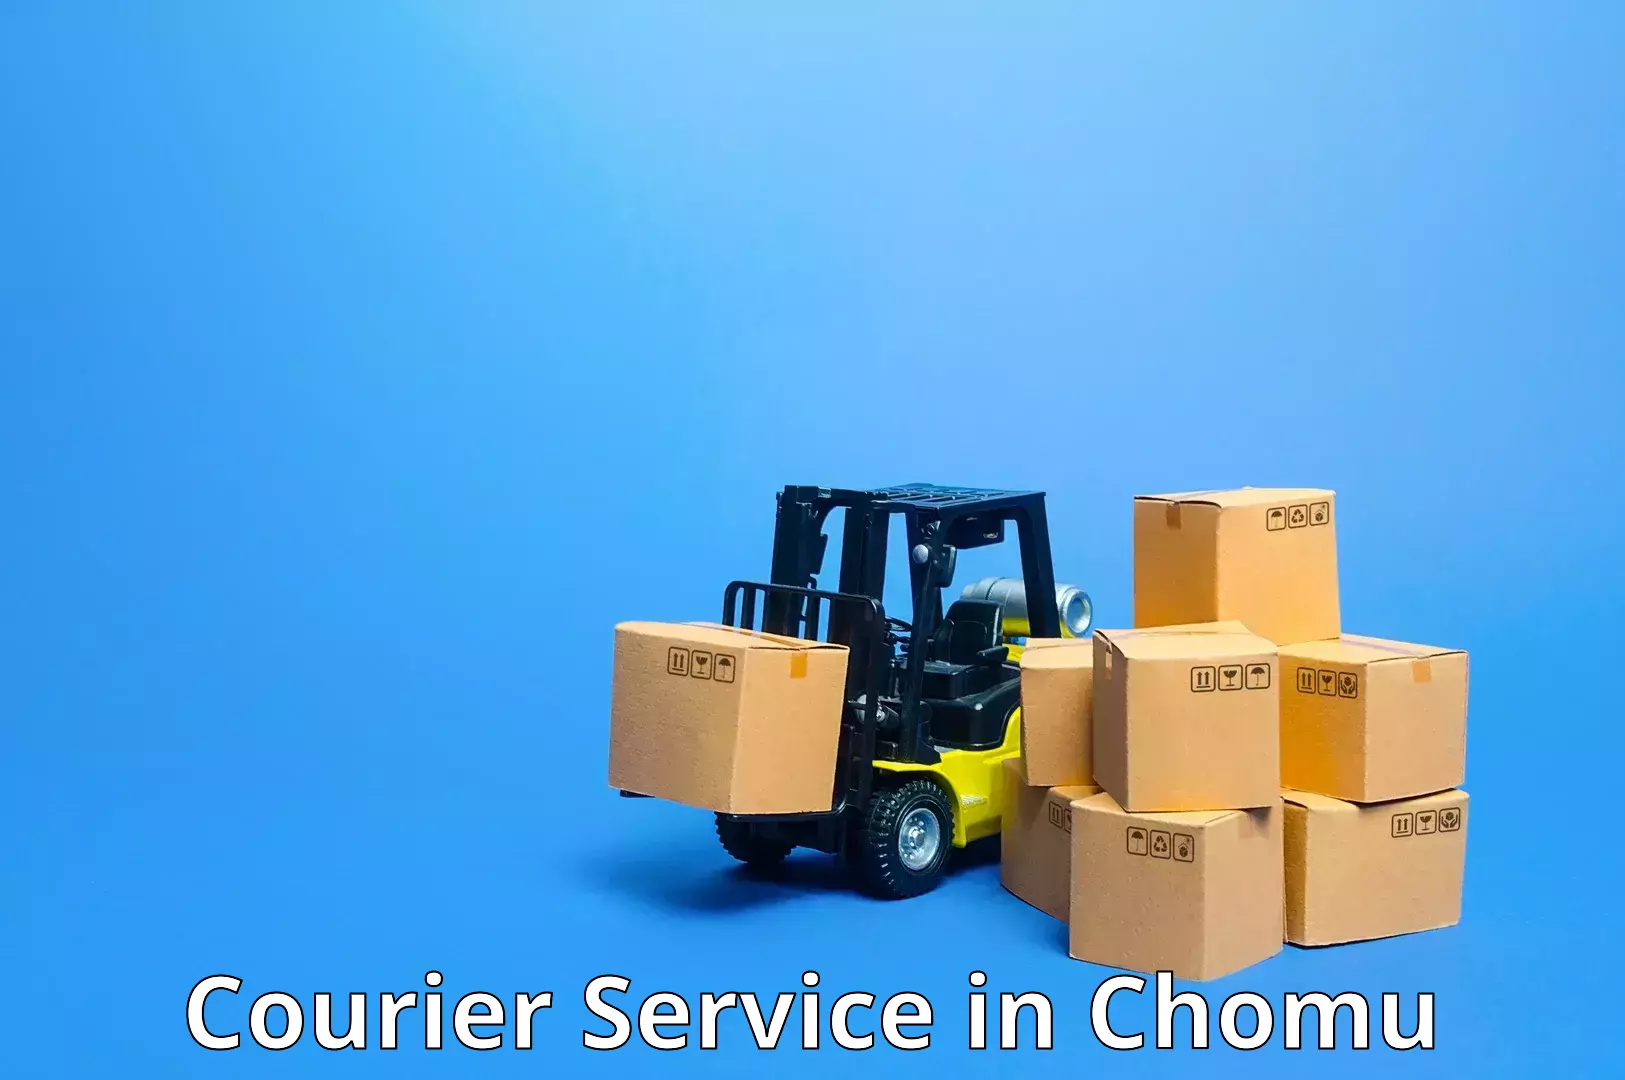 Express shipping in Chomu